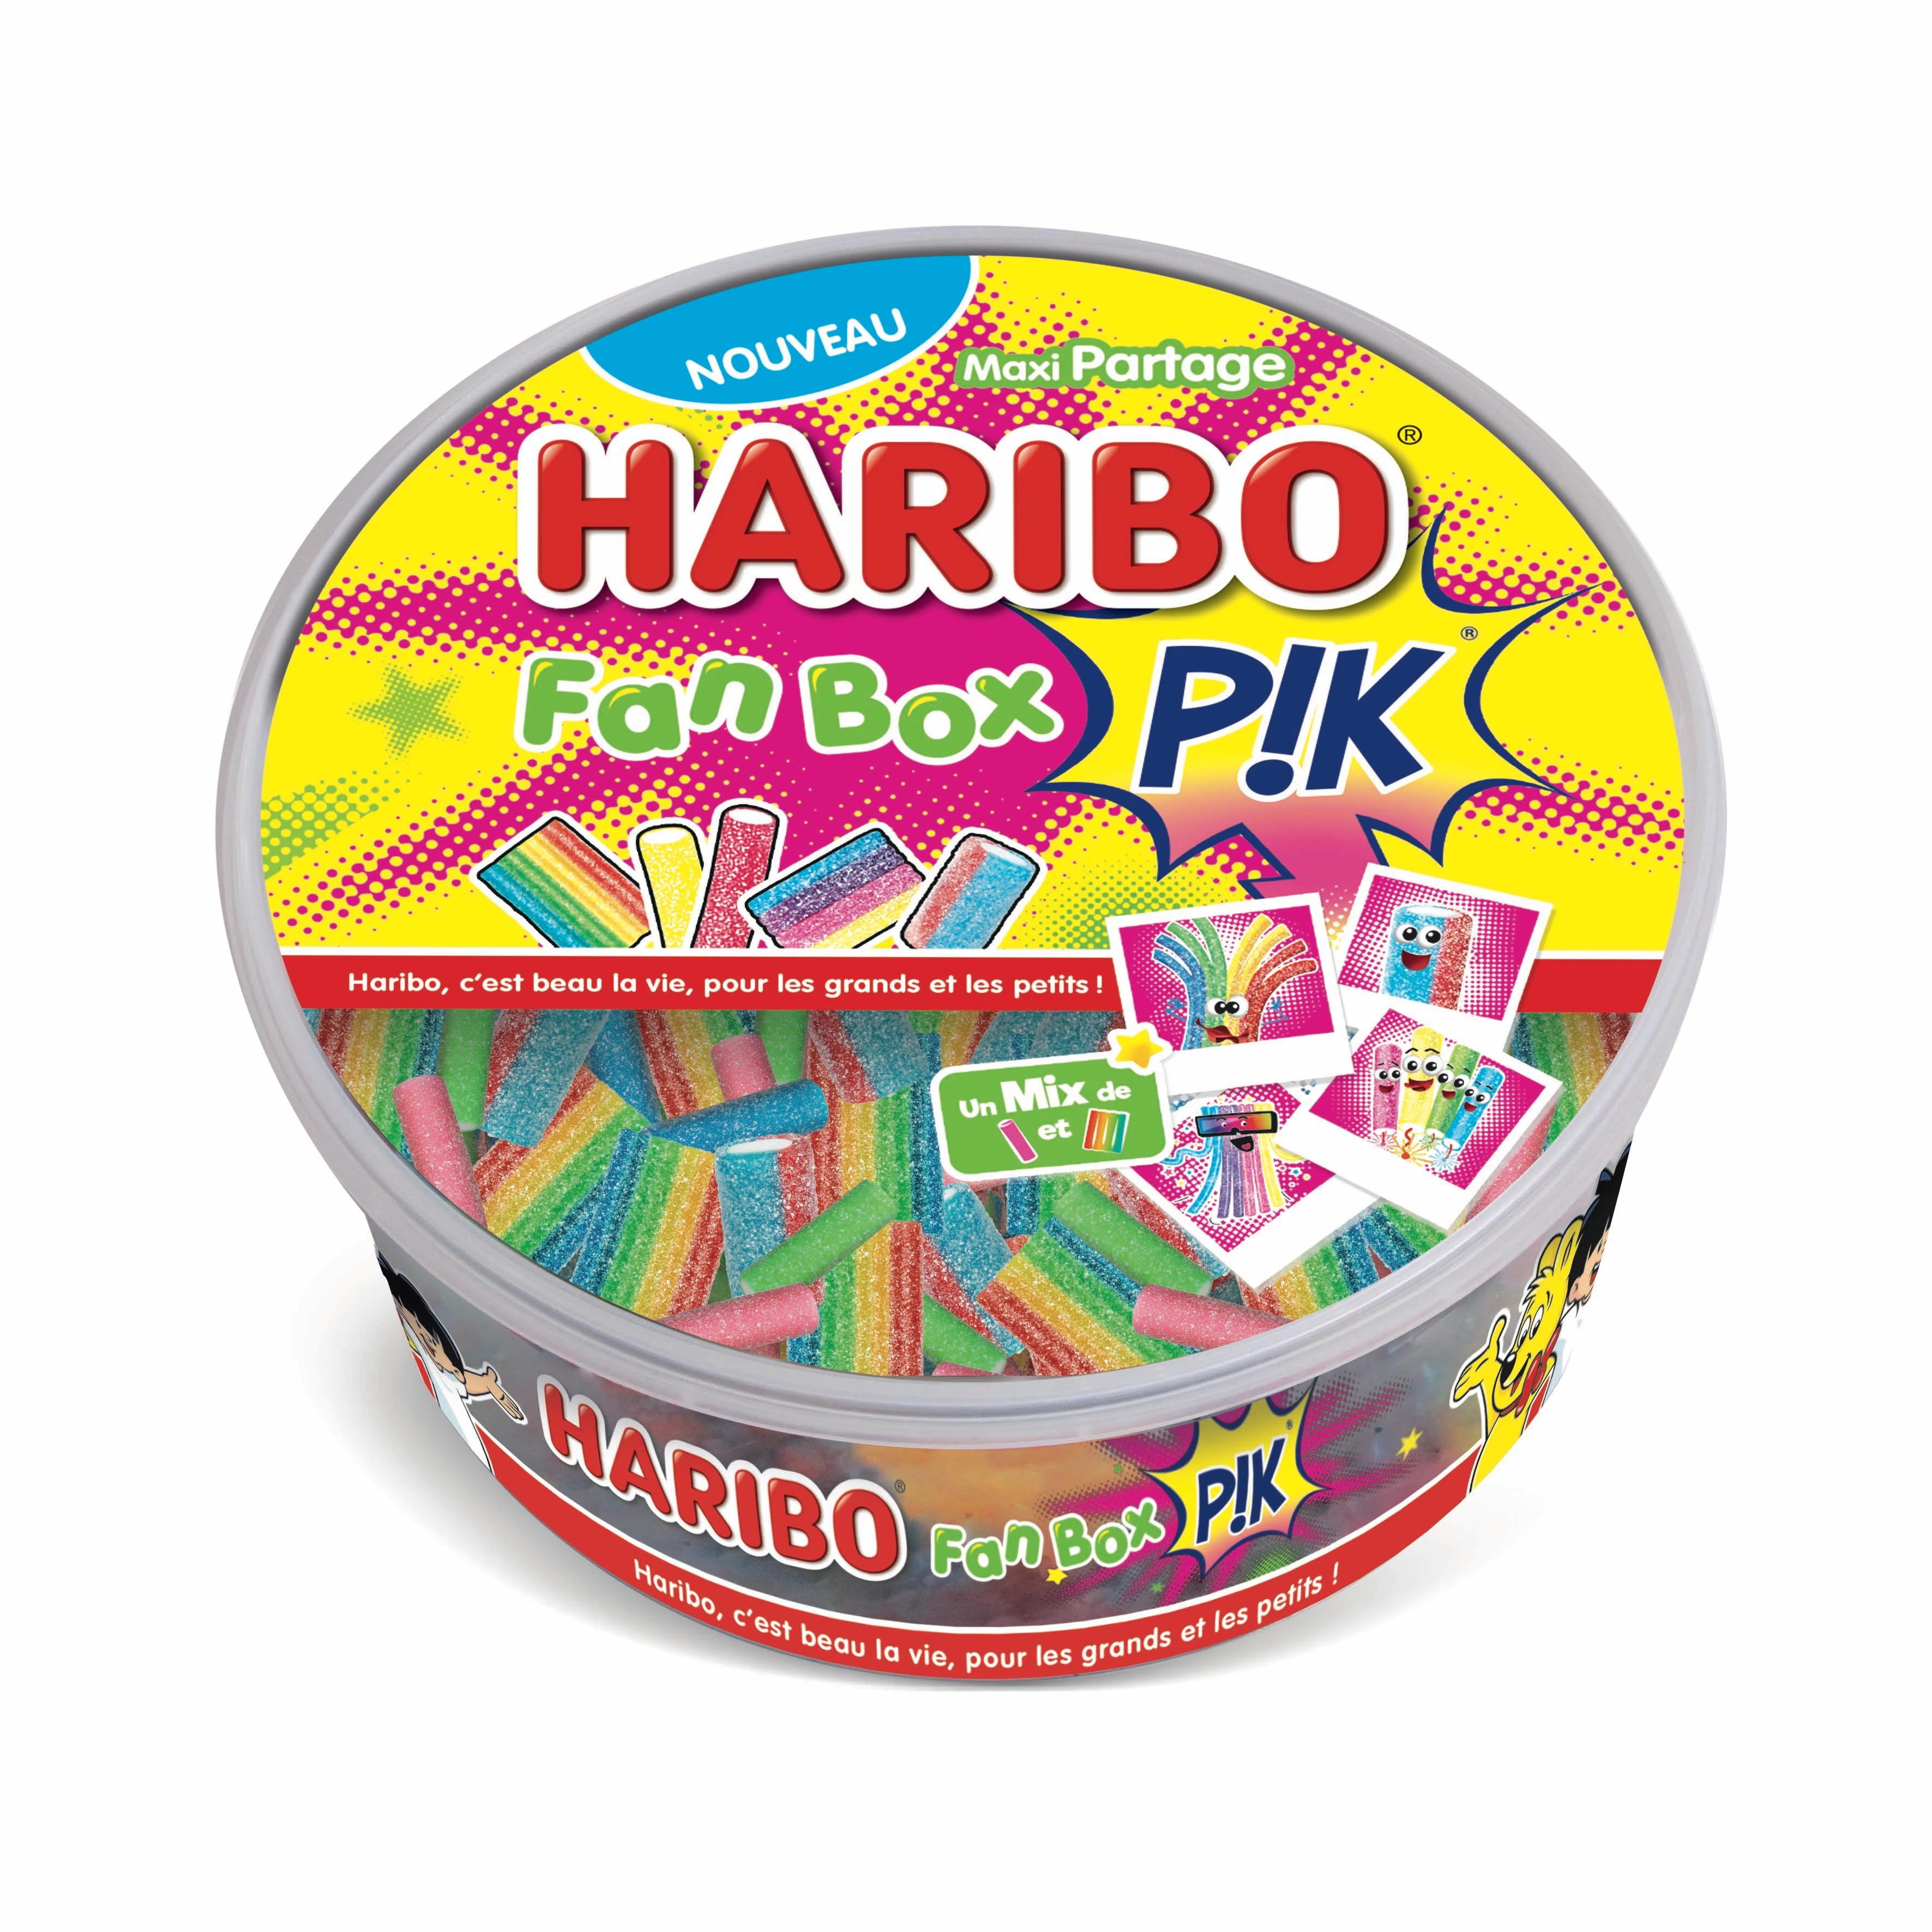 Bonbons Fan box Pik; 500g - HARIBO